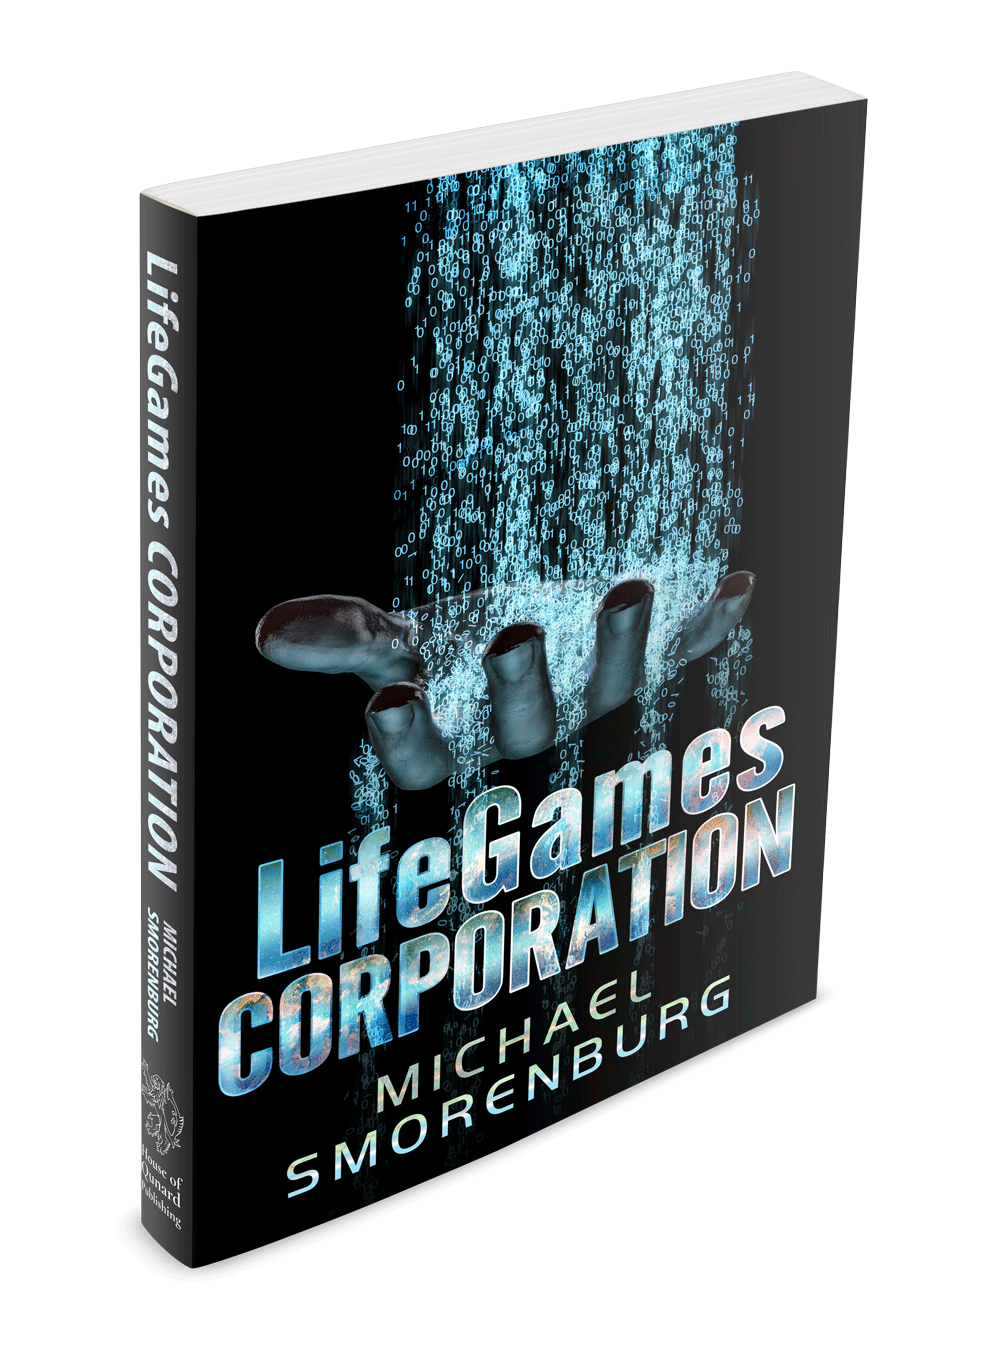 LifeGames Corporation